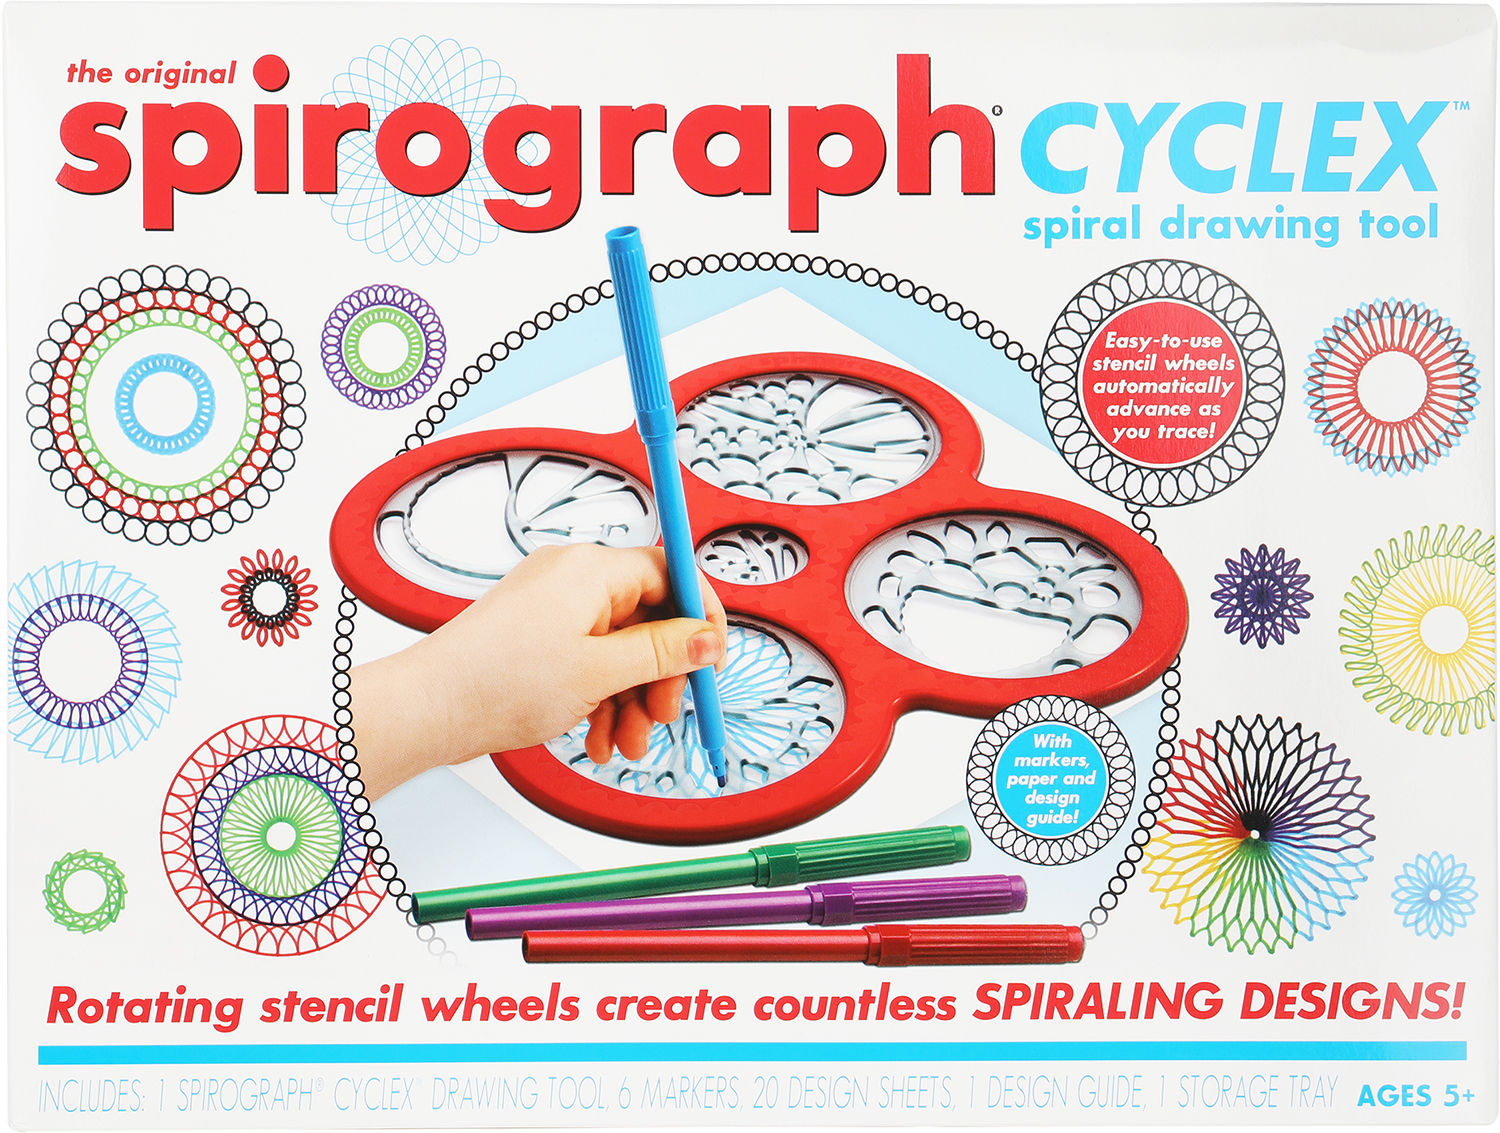 Spirograph Cyclex Ritverktyg